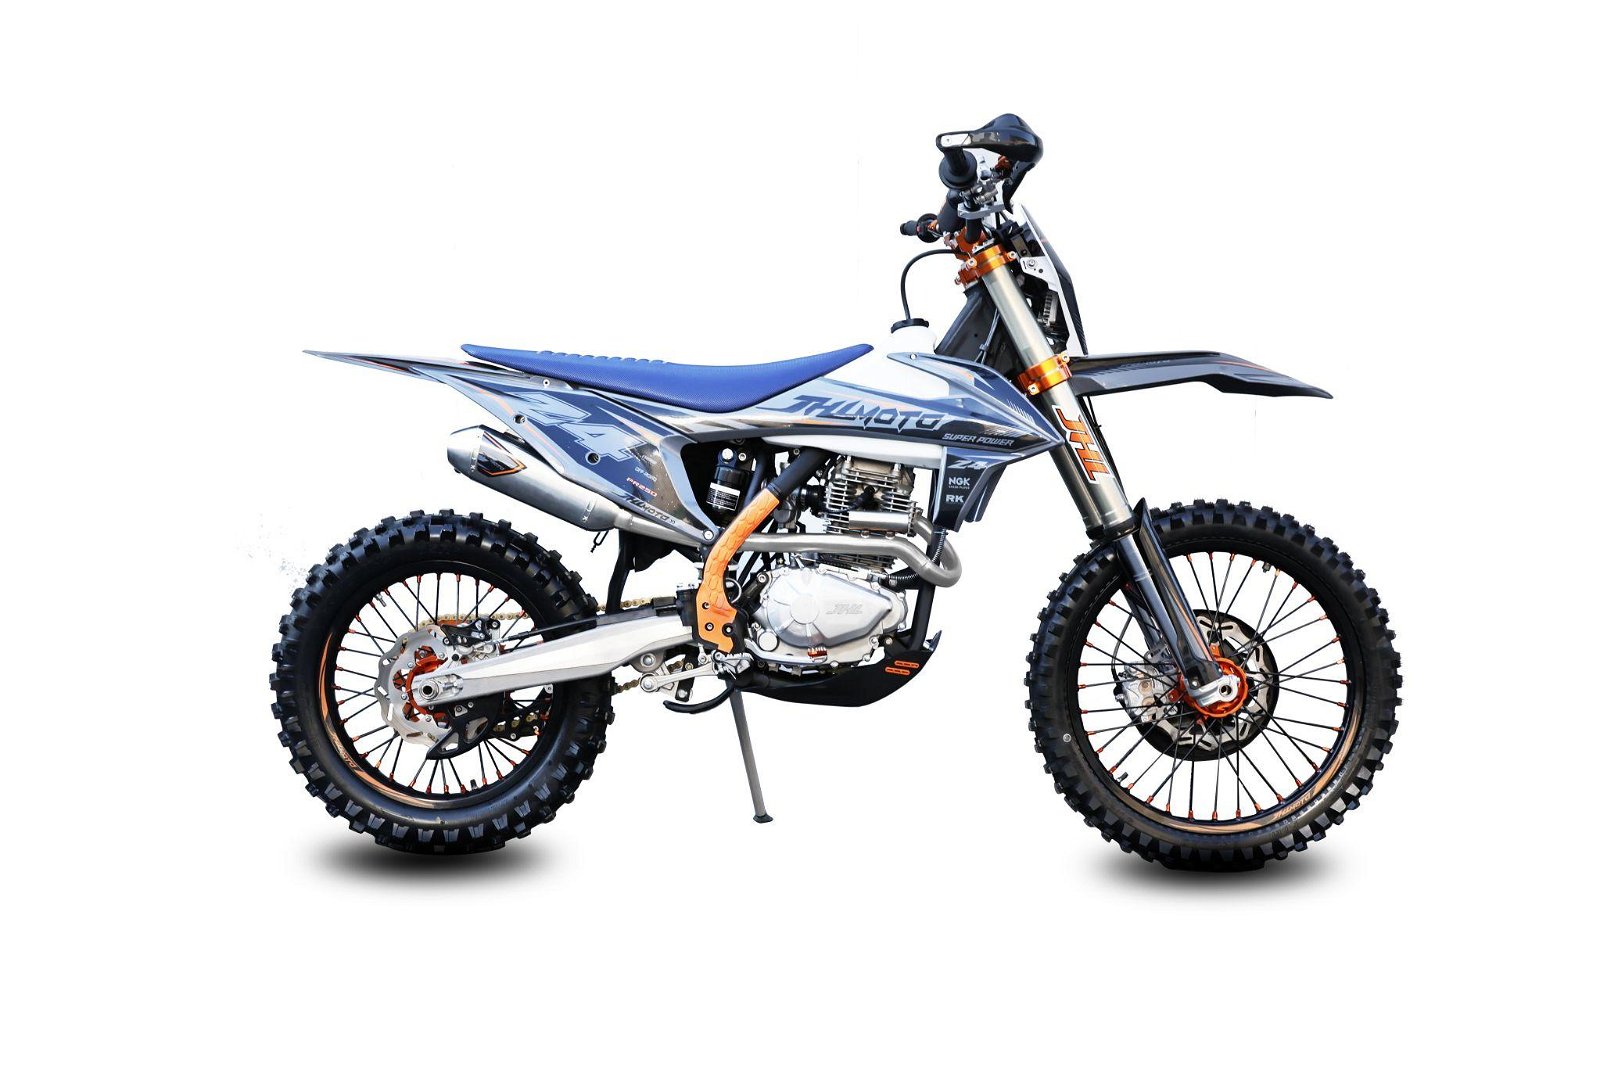 Sell Jhlmoto 250cc Dirt Bike/Enduro Motorcycle 2